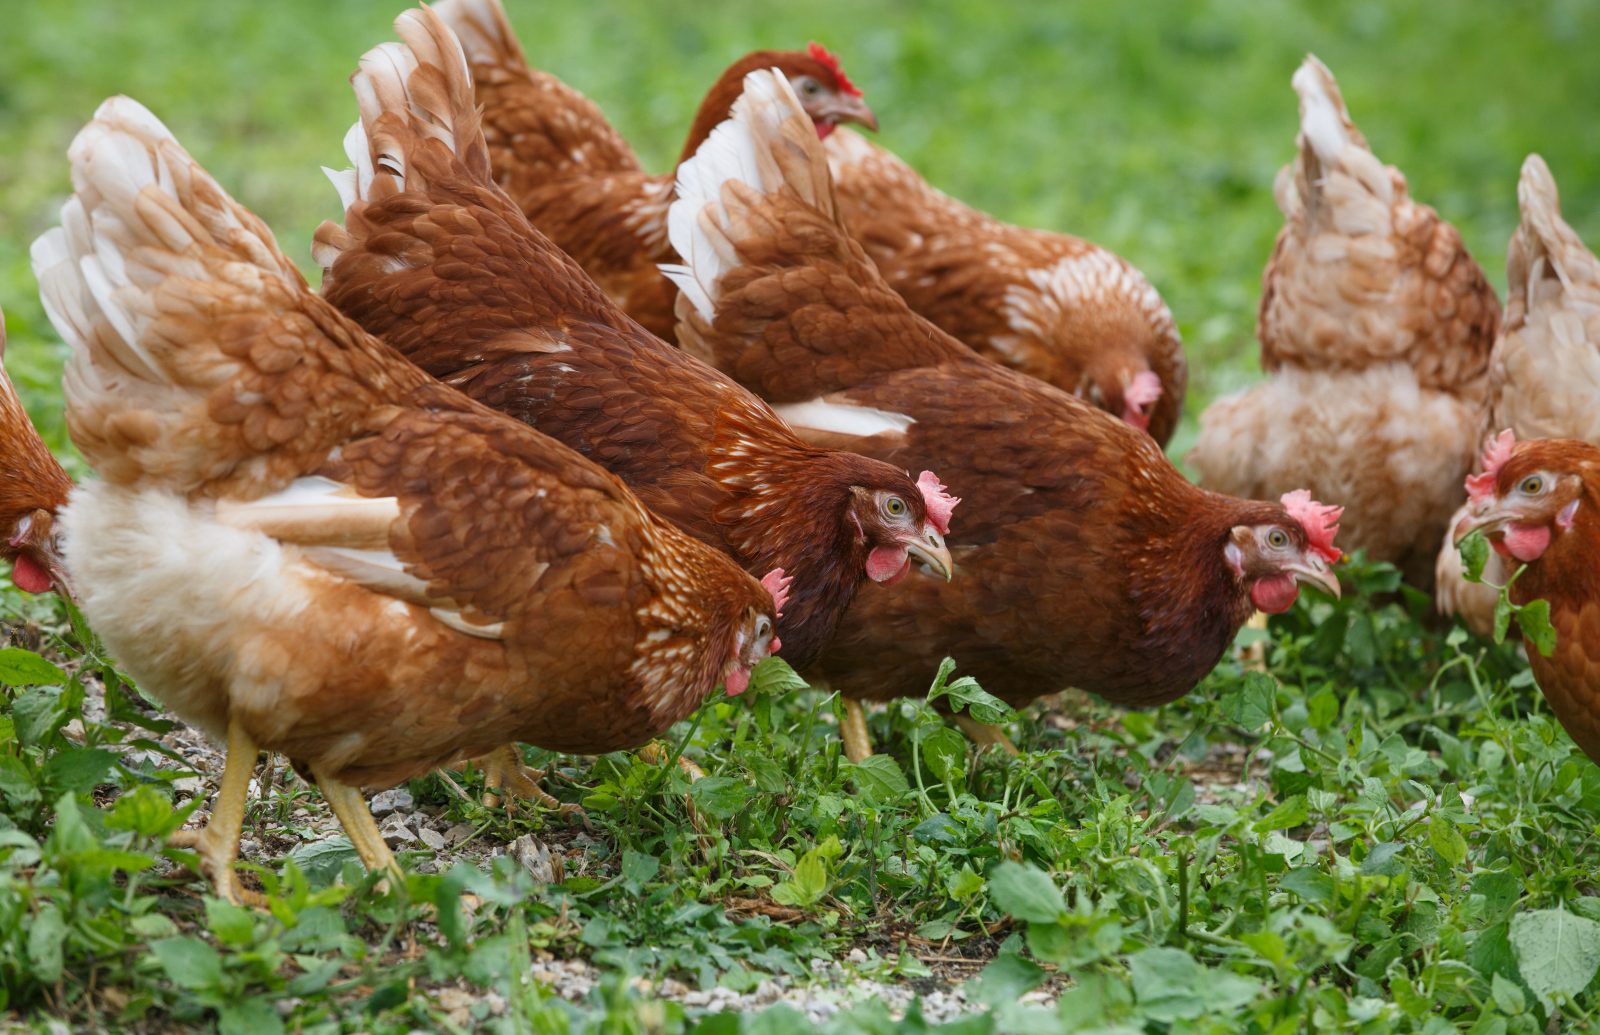 Press Release: Food giants join GCAW to advance animal welfare – GCAW